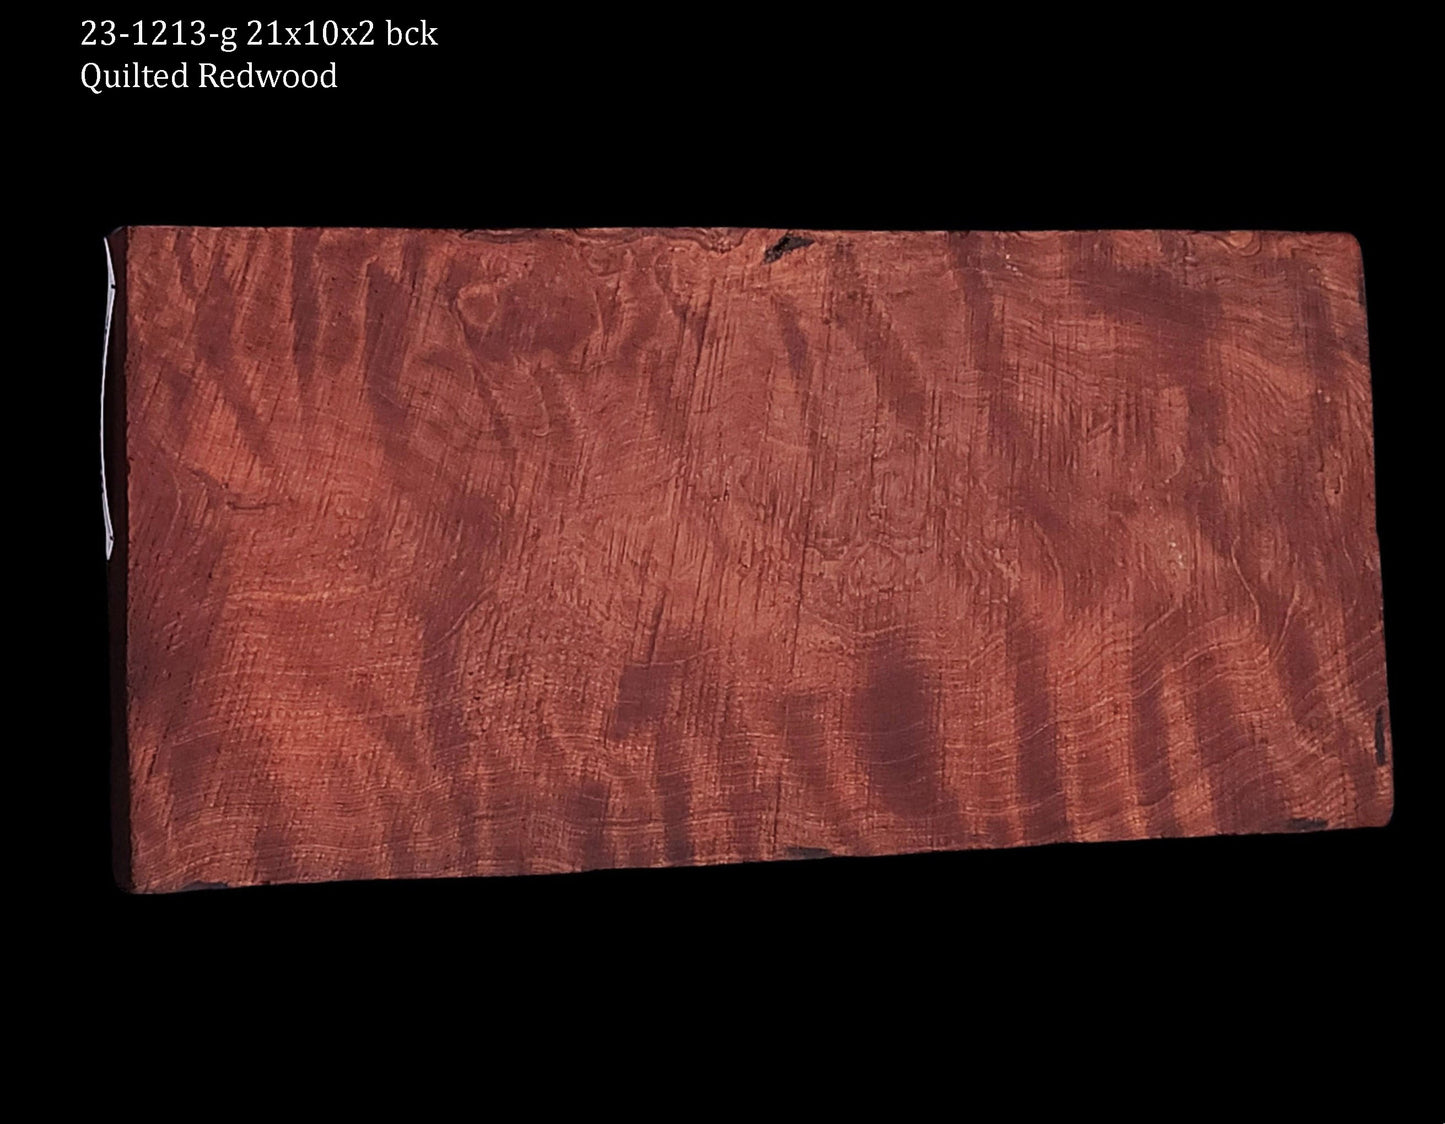 Quilted Redwood Guitar Billet | Craft Wood | Luthier Wood | 23-1213-g